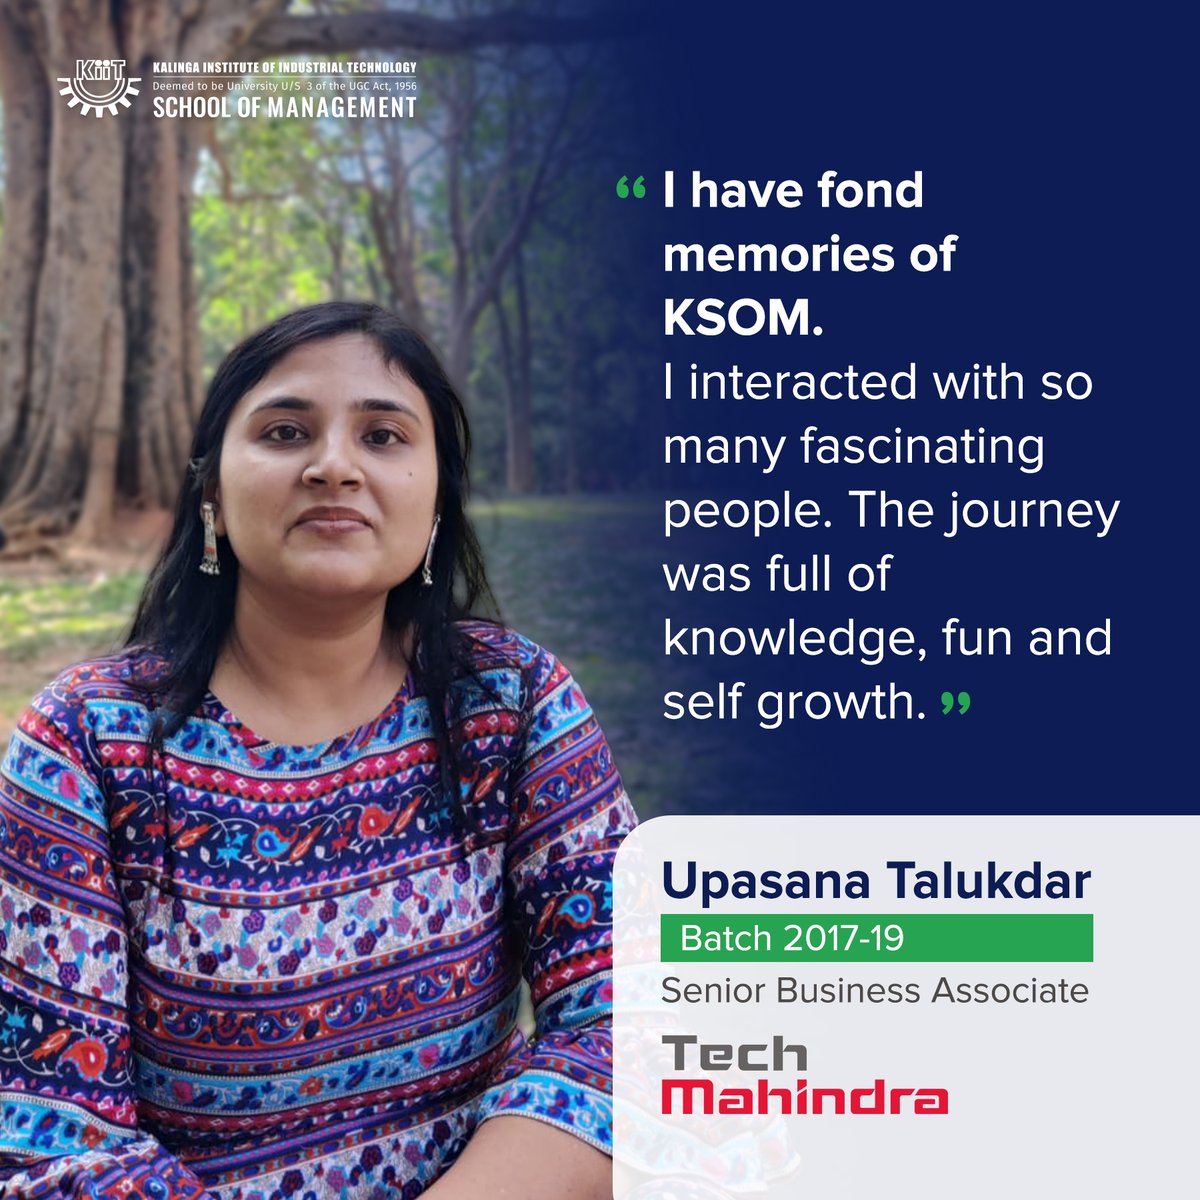 Our Alumni, Upasana Talukdar, Senior Business Associate at Tech Mahindra, tells us how KSOM provided experiential learning and self-development opportunities.

#ksombbsr #AlumniAchievements #MBA #kiit